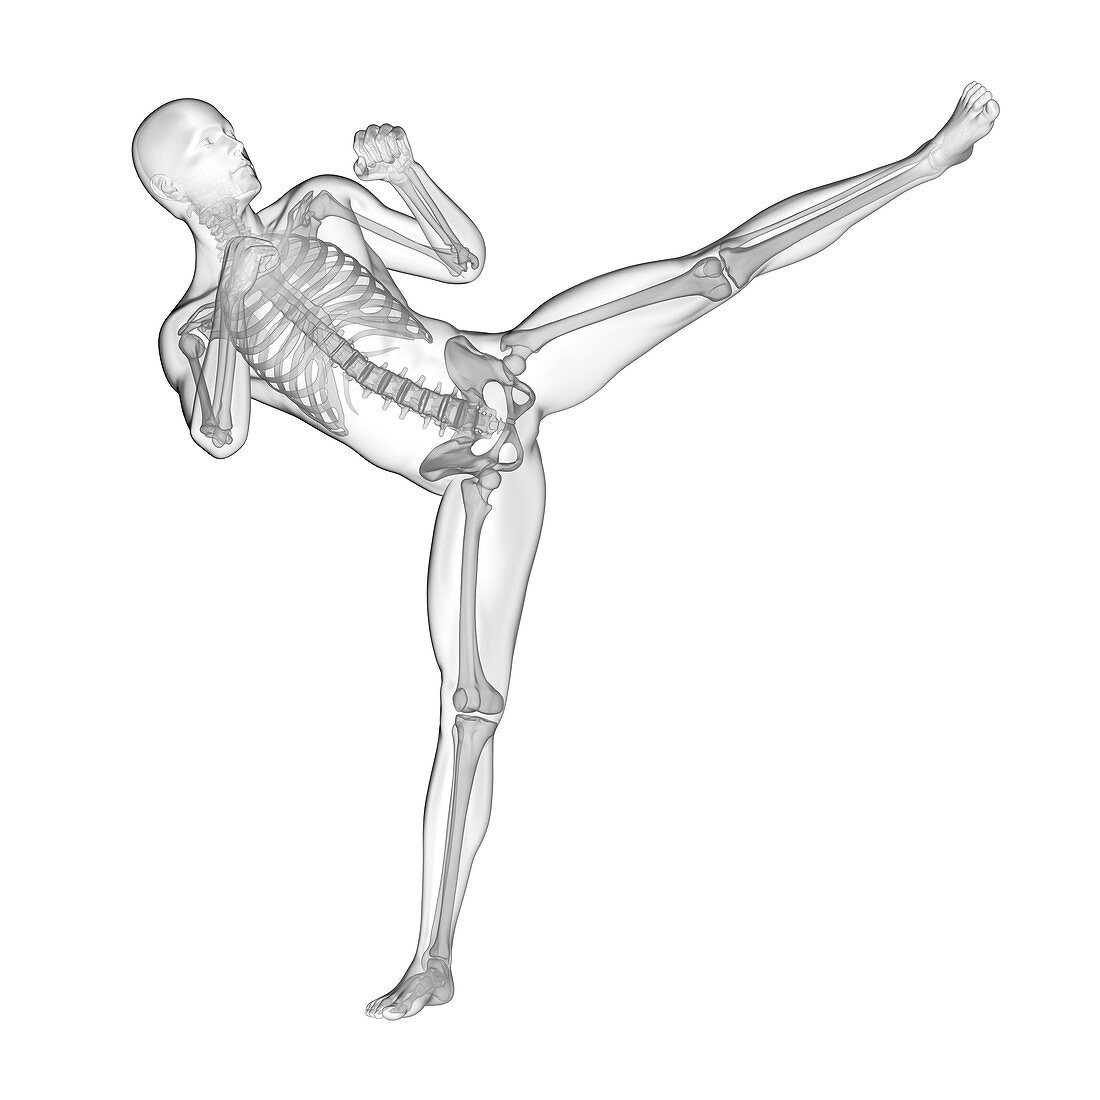 Person kick boxing, skeletal system, illustration